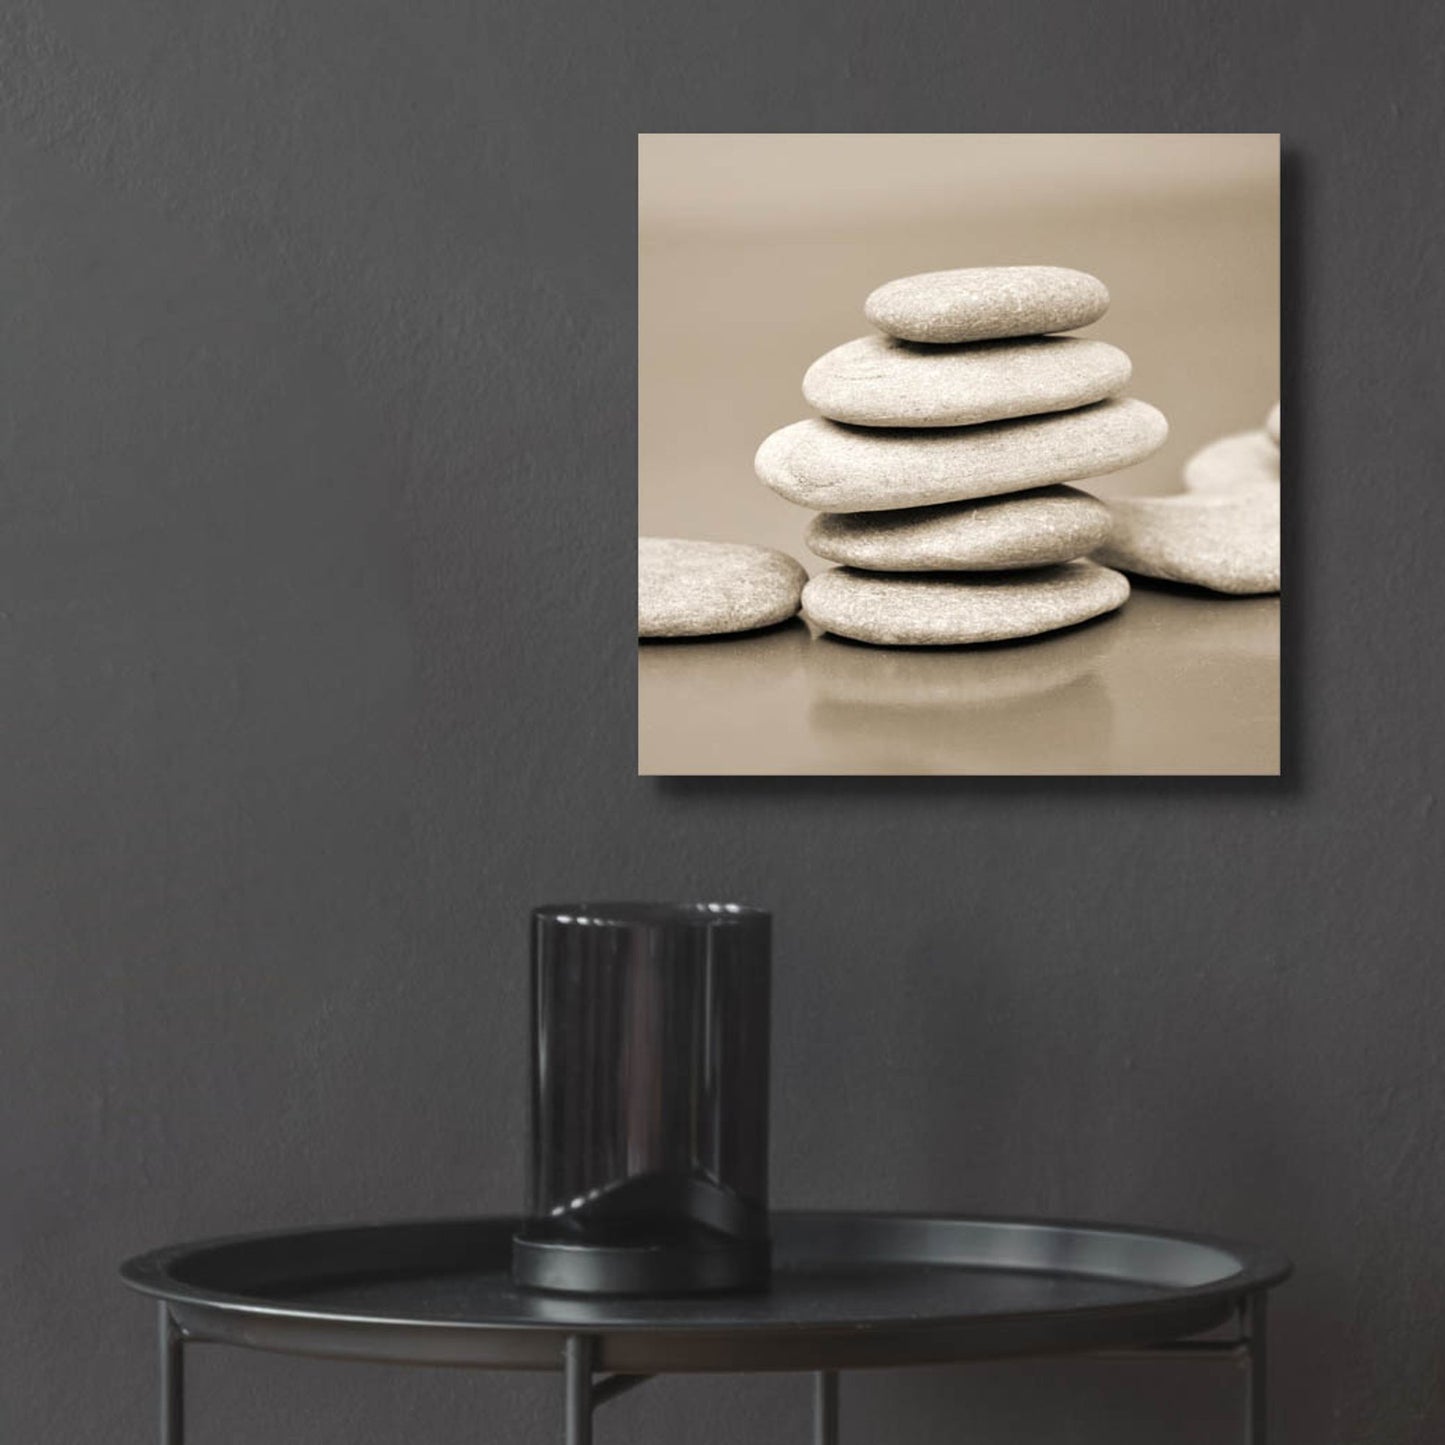 Epic Art 'Zen Pebbles 1' by Photoinc Studio, Acrylic Glass Wall Art,12x12